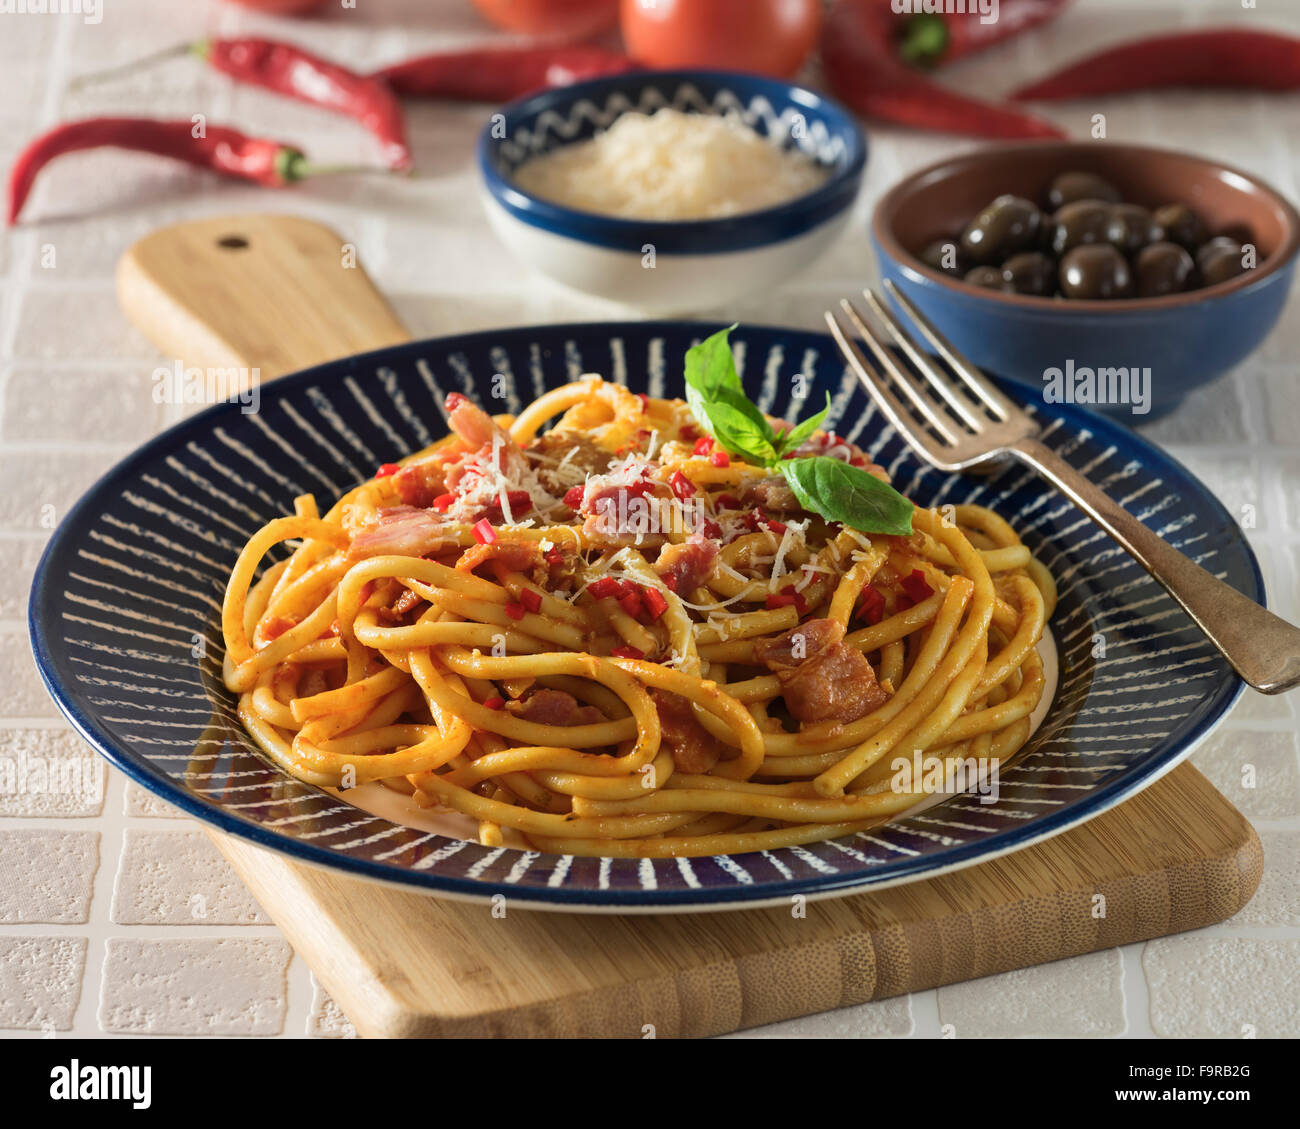 Bucatini all'amatriciana. Pasta mit Speck und Tomatensauce. Italienisches Essen. Stockfoto